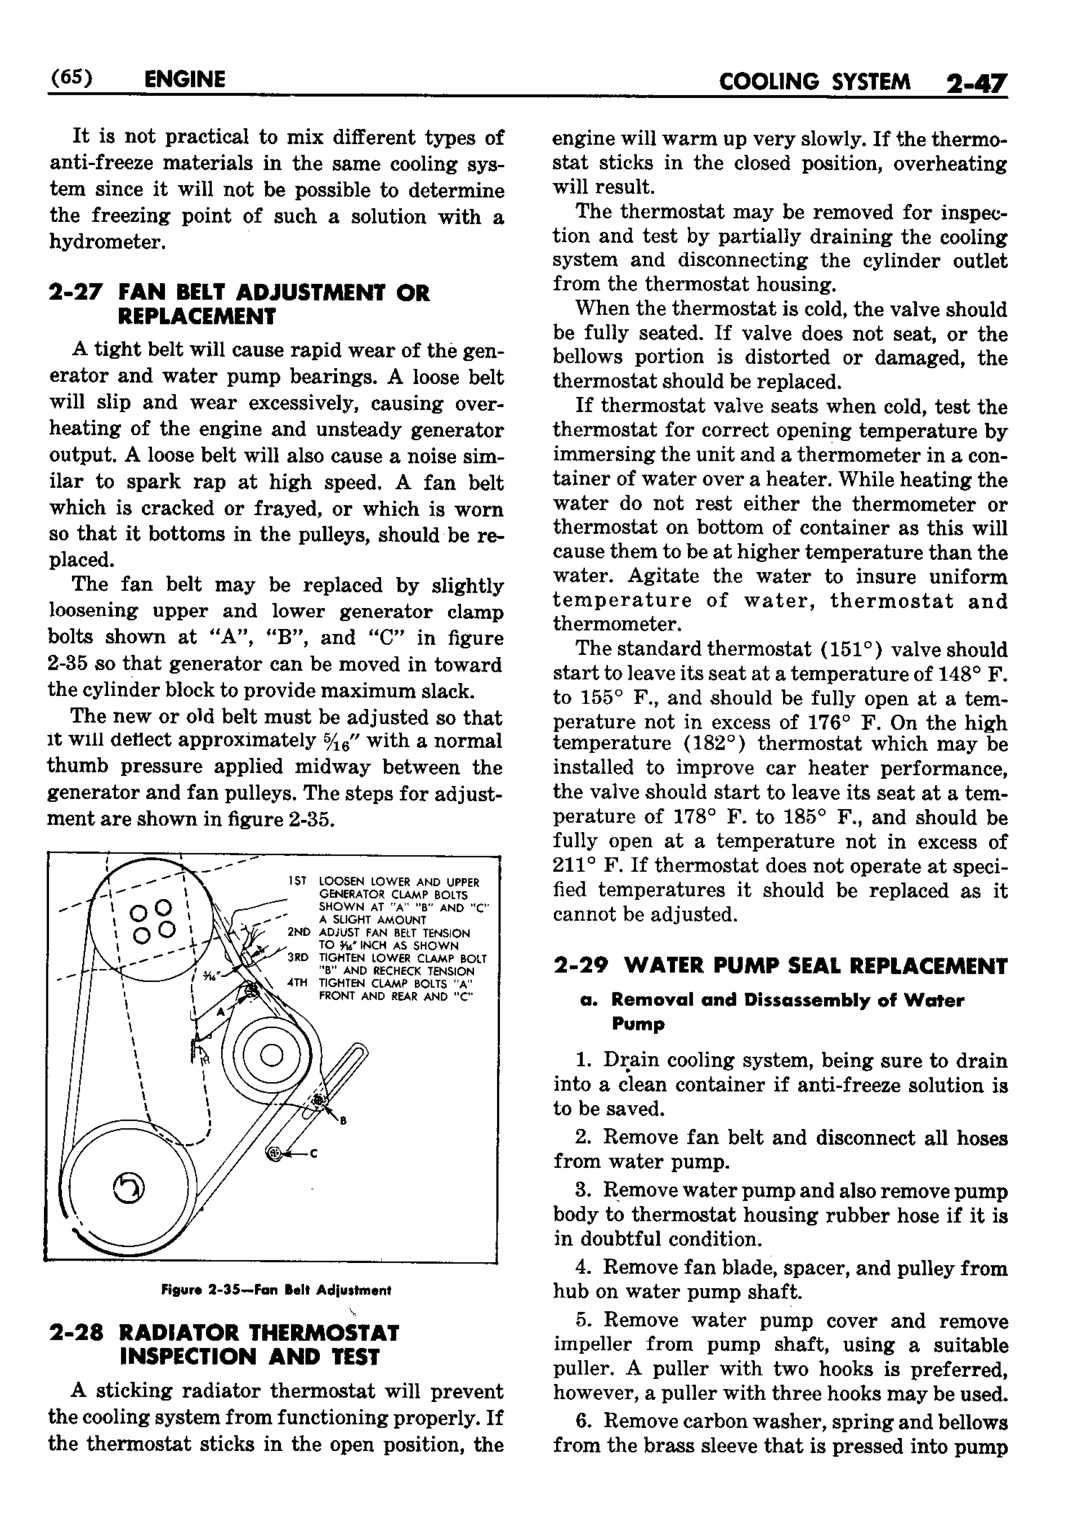 n_03 1952 Buick Shop Manual - Engine-047-047.jpg